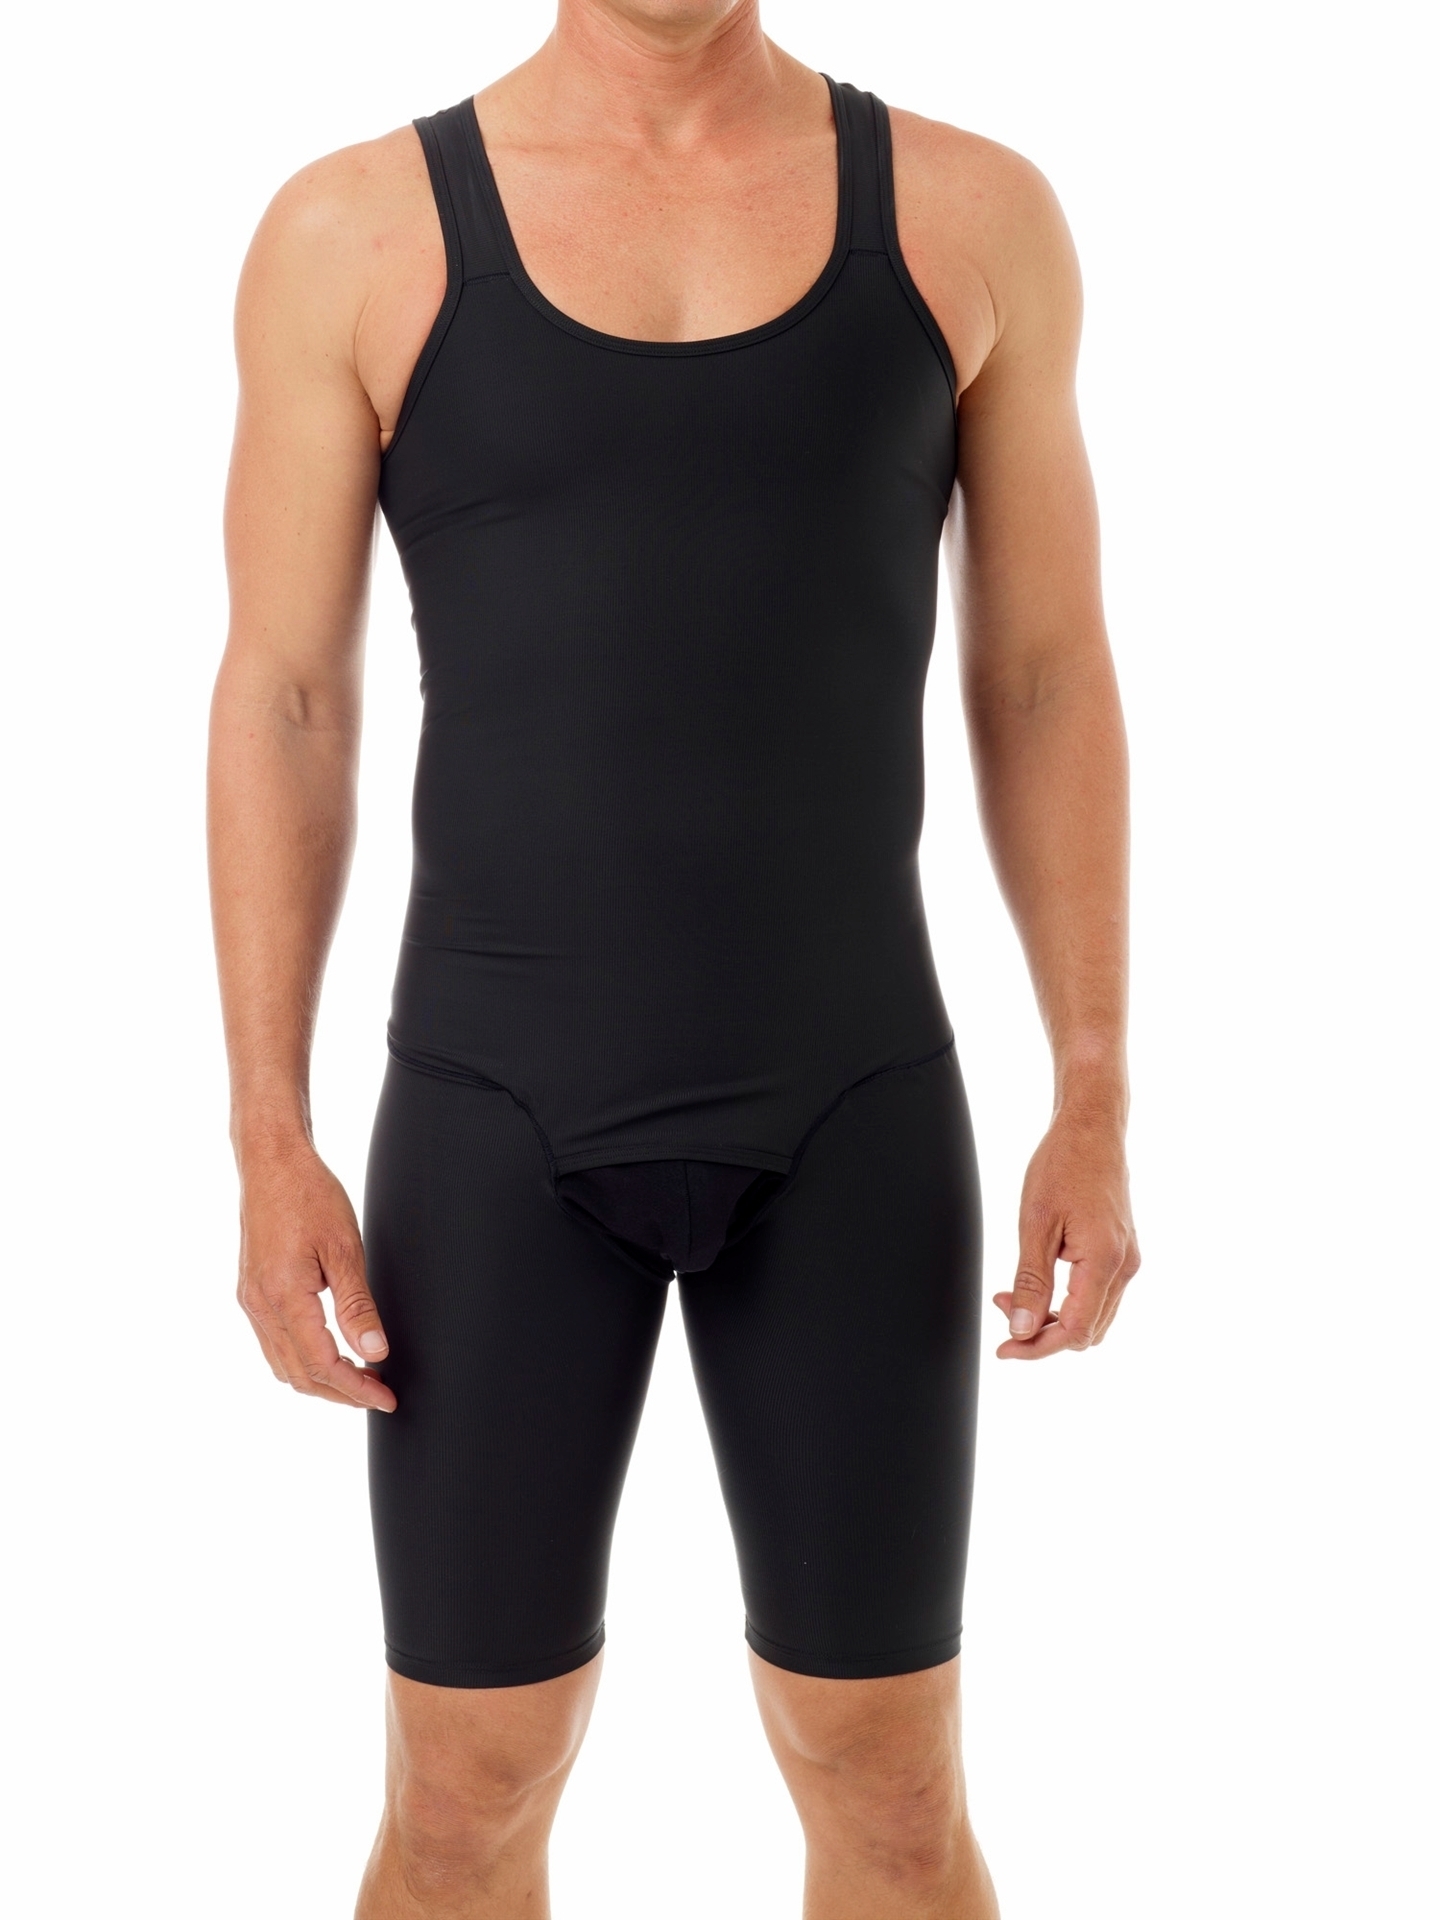 Men's Compression Bodysuit with Rear Zipper